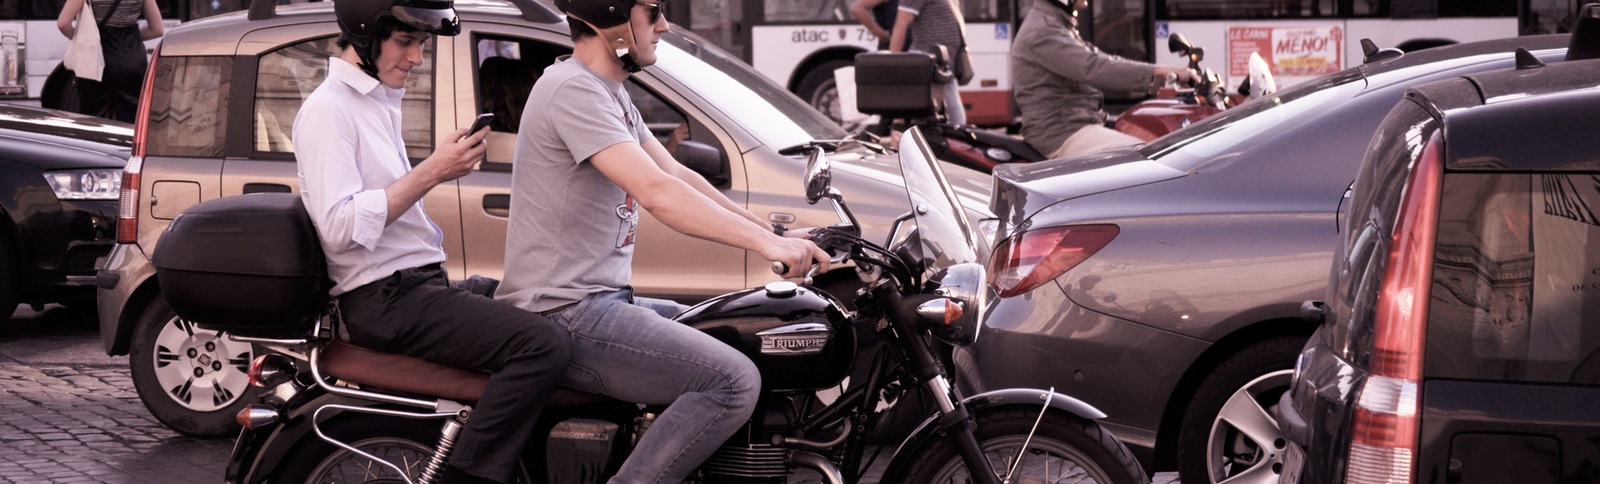 motorcycle-smartphone